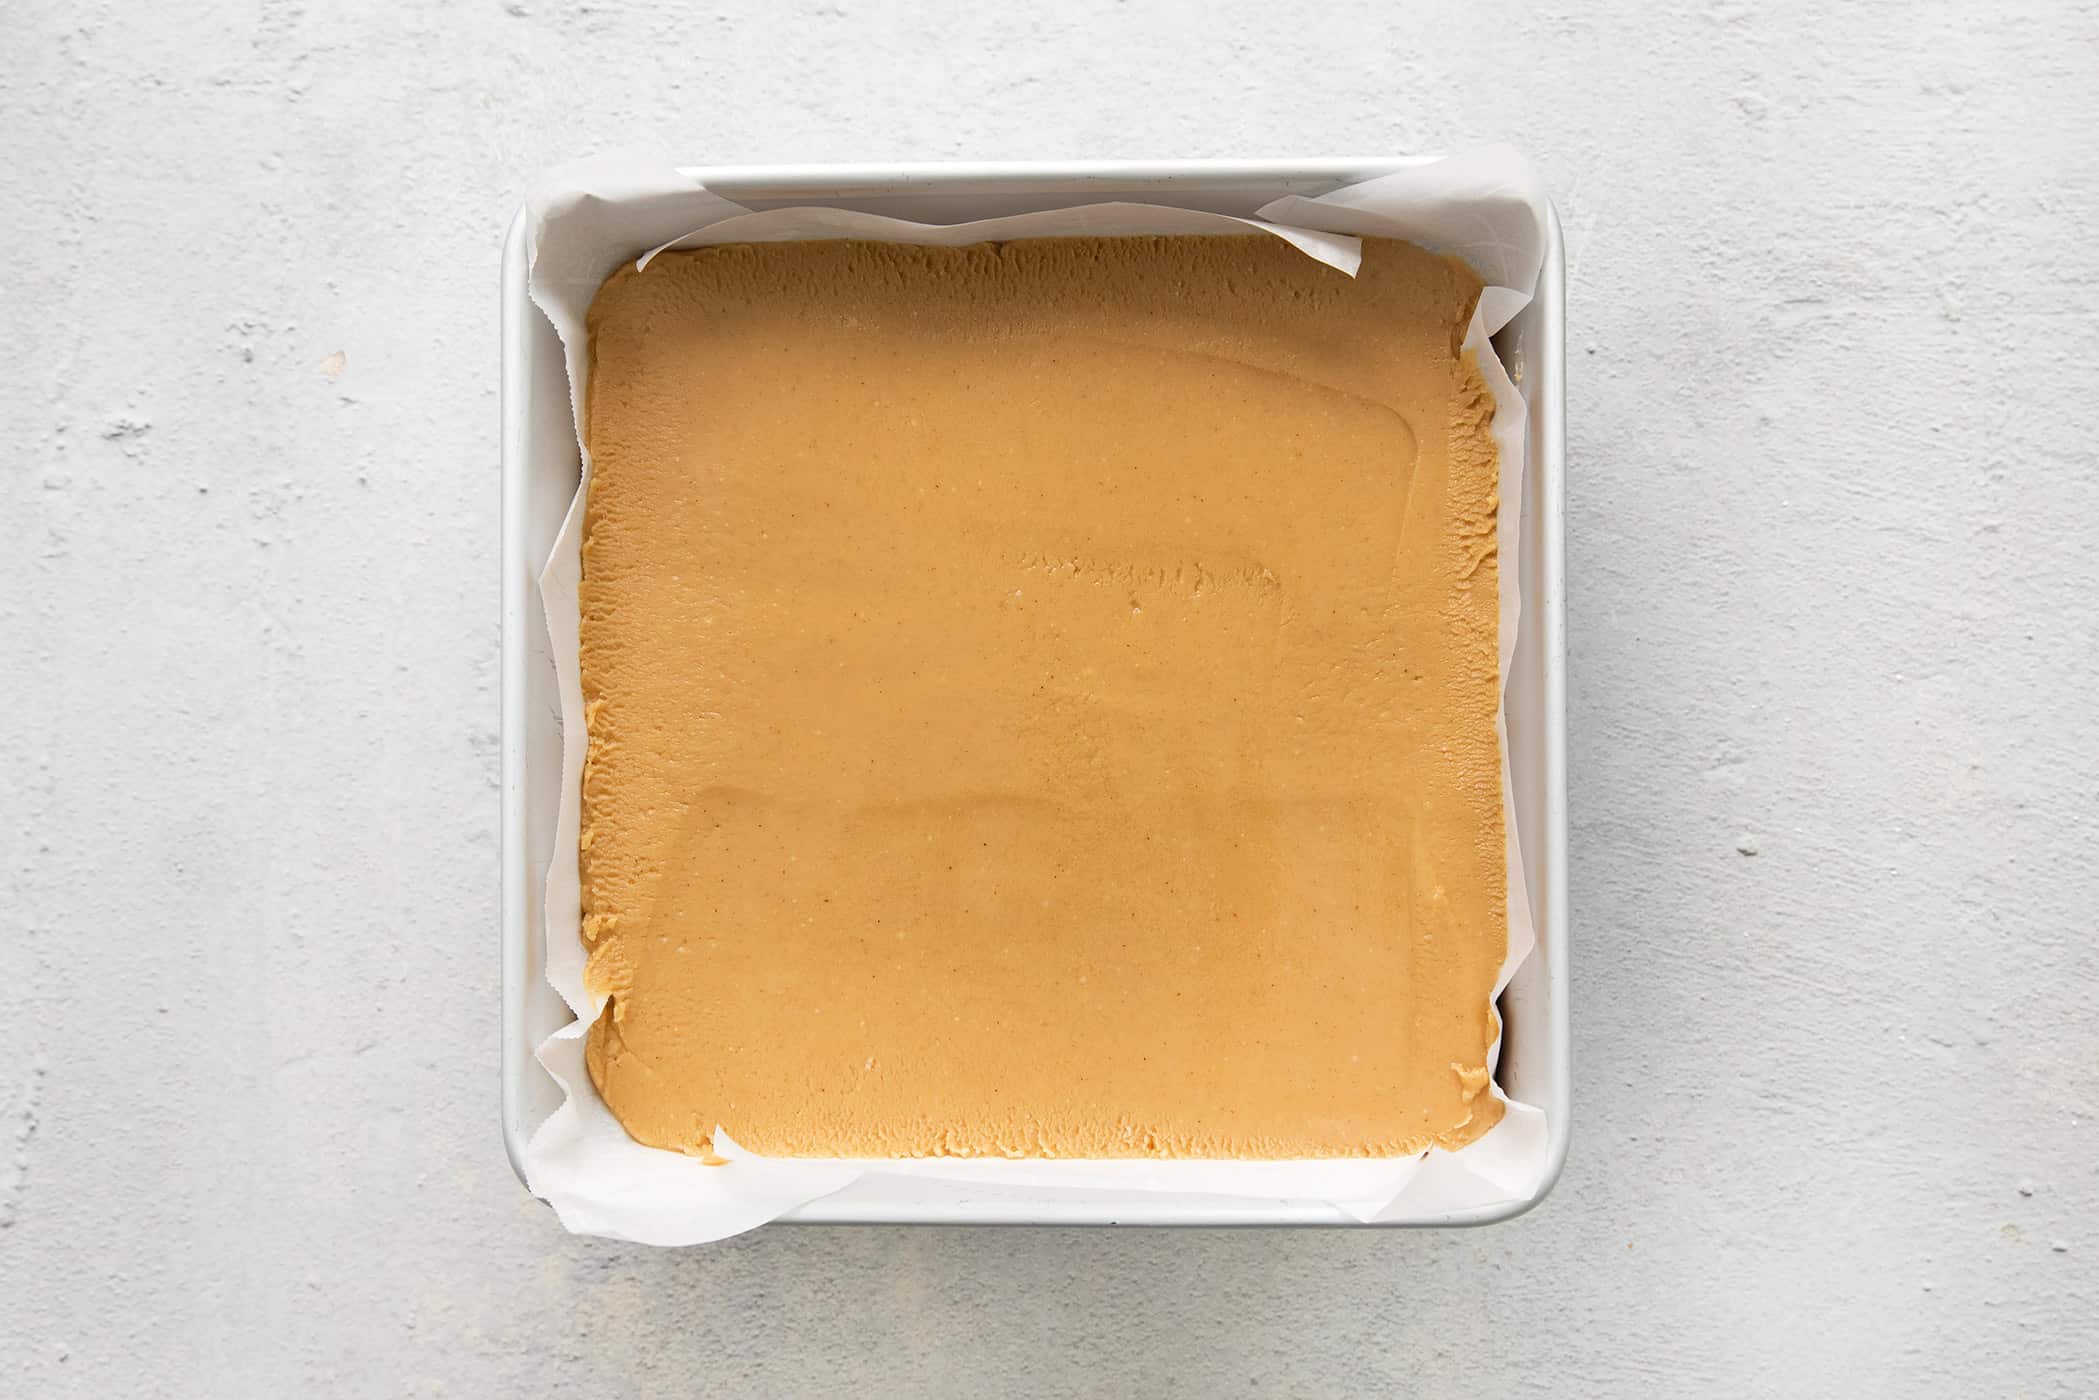 peanut butter fudge spread in a pan